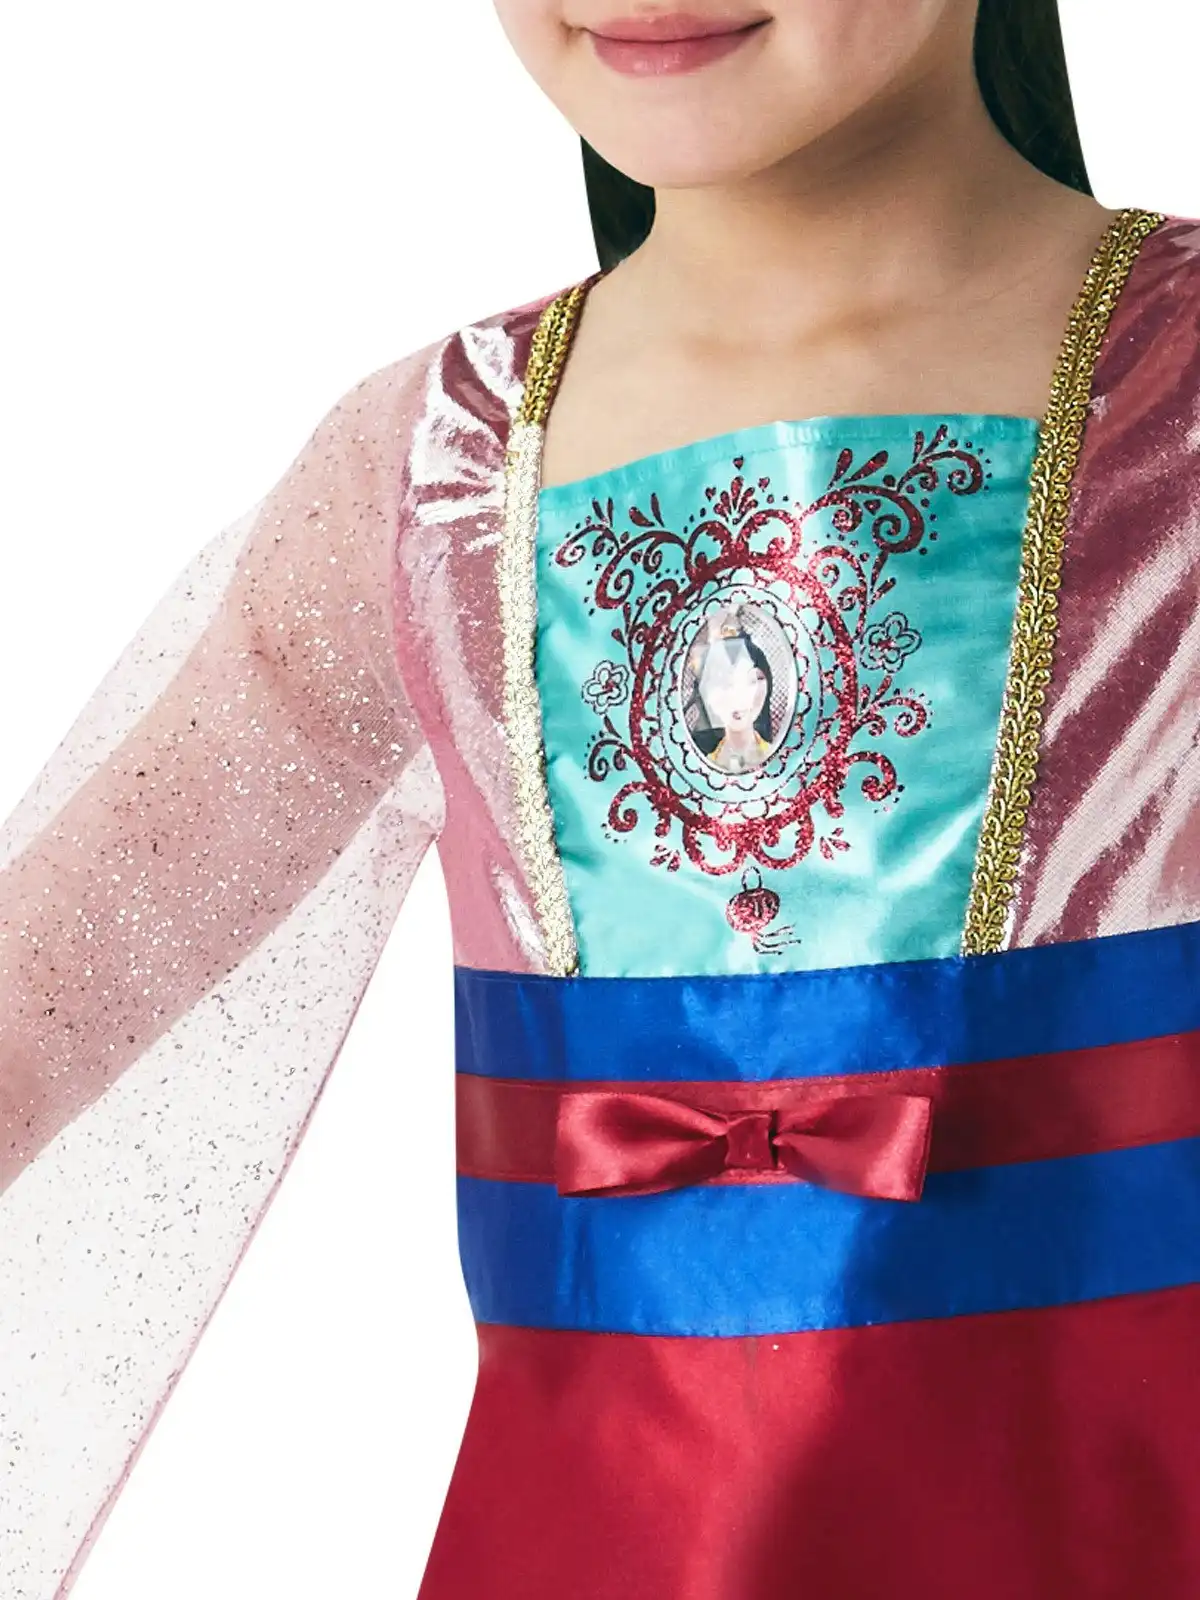 Disney Mulan Gem Opp Princess Dress Up Kids Halloween Party Costume Size 4-6